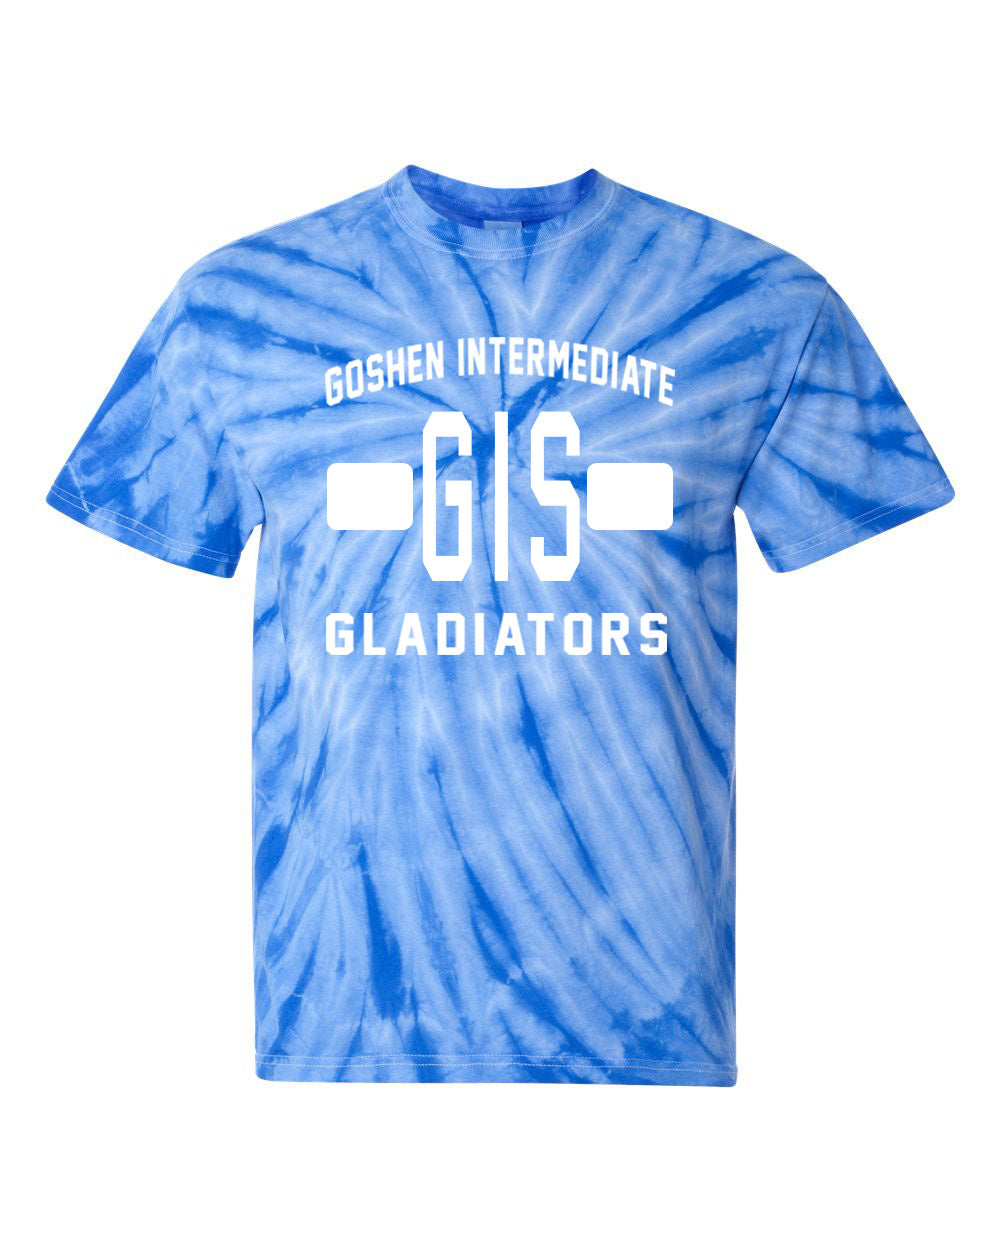 Goshen School Design 6 Tie Dye t-shirt